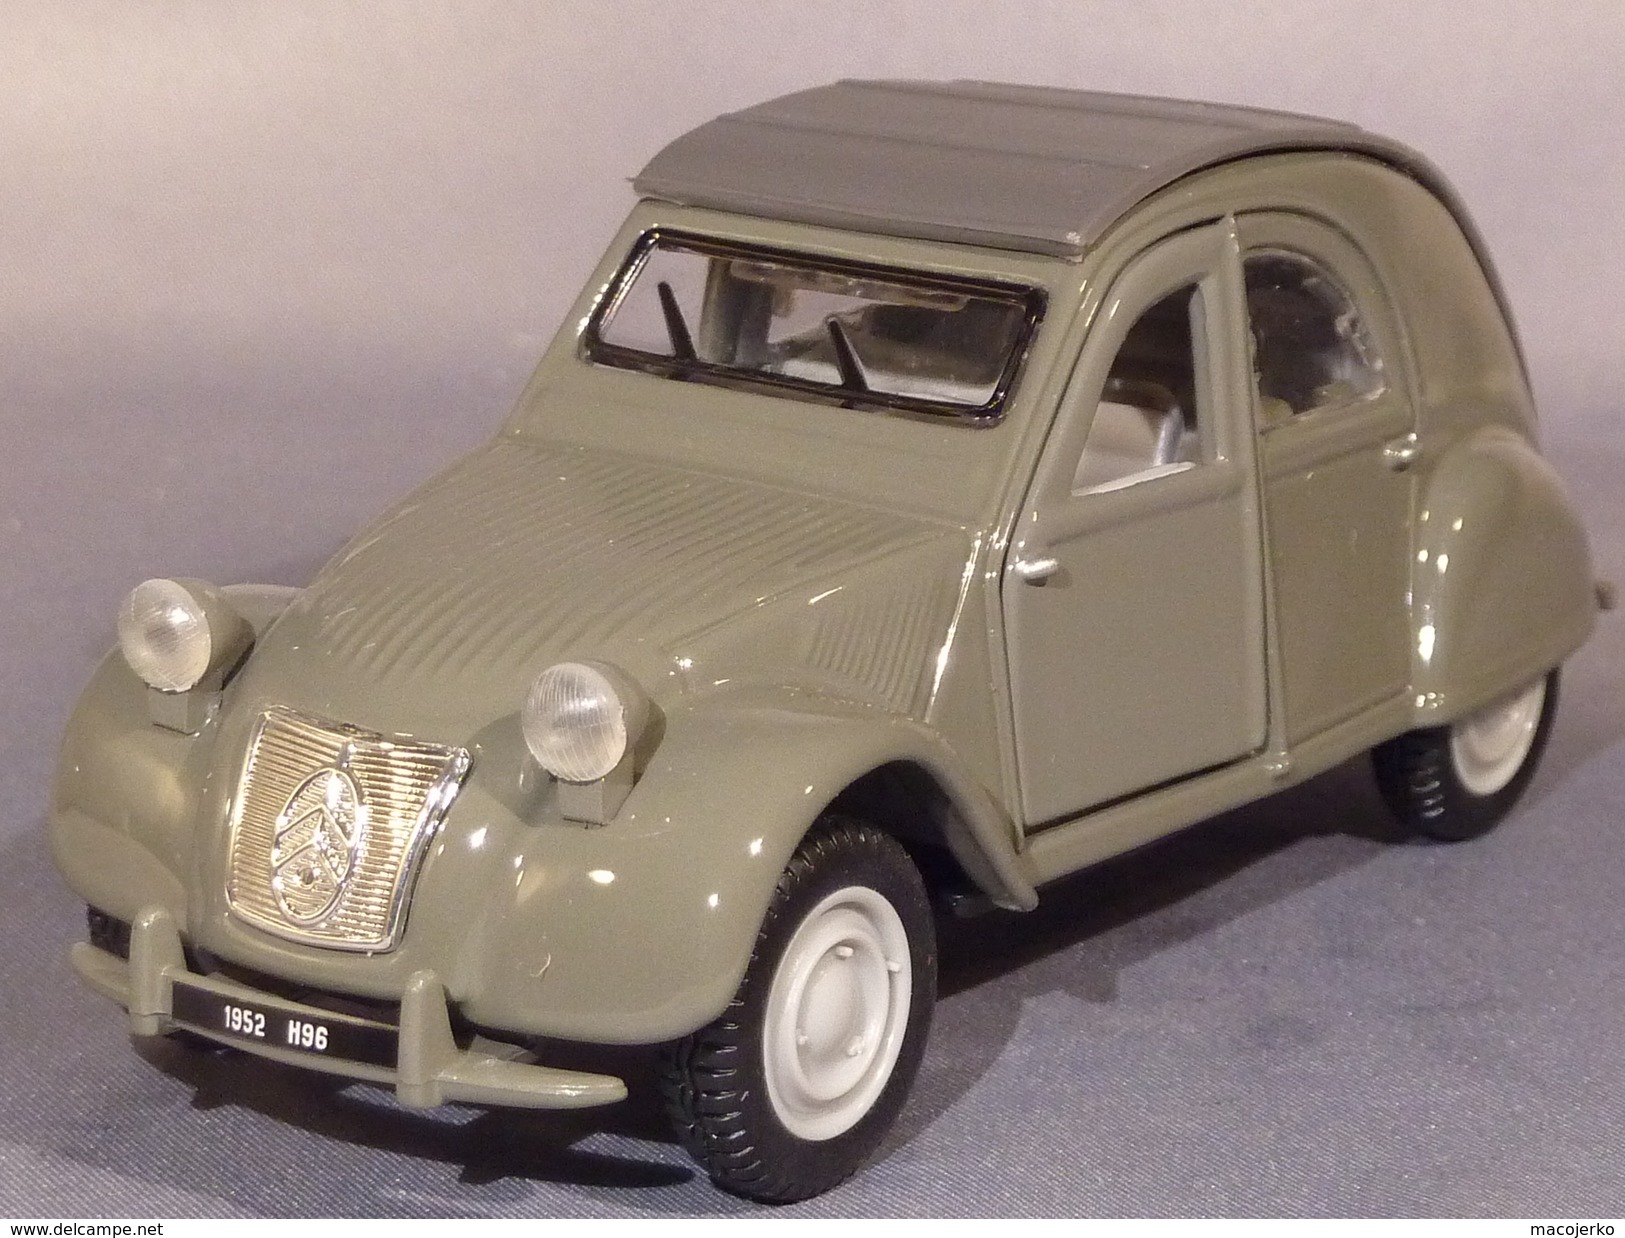 Burago 18-43200, Citroën 2CV, 1:32 - Echelle 1:32